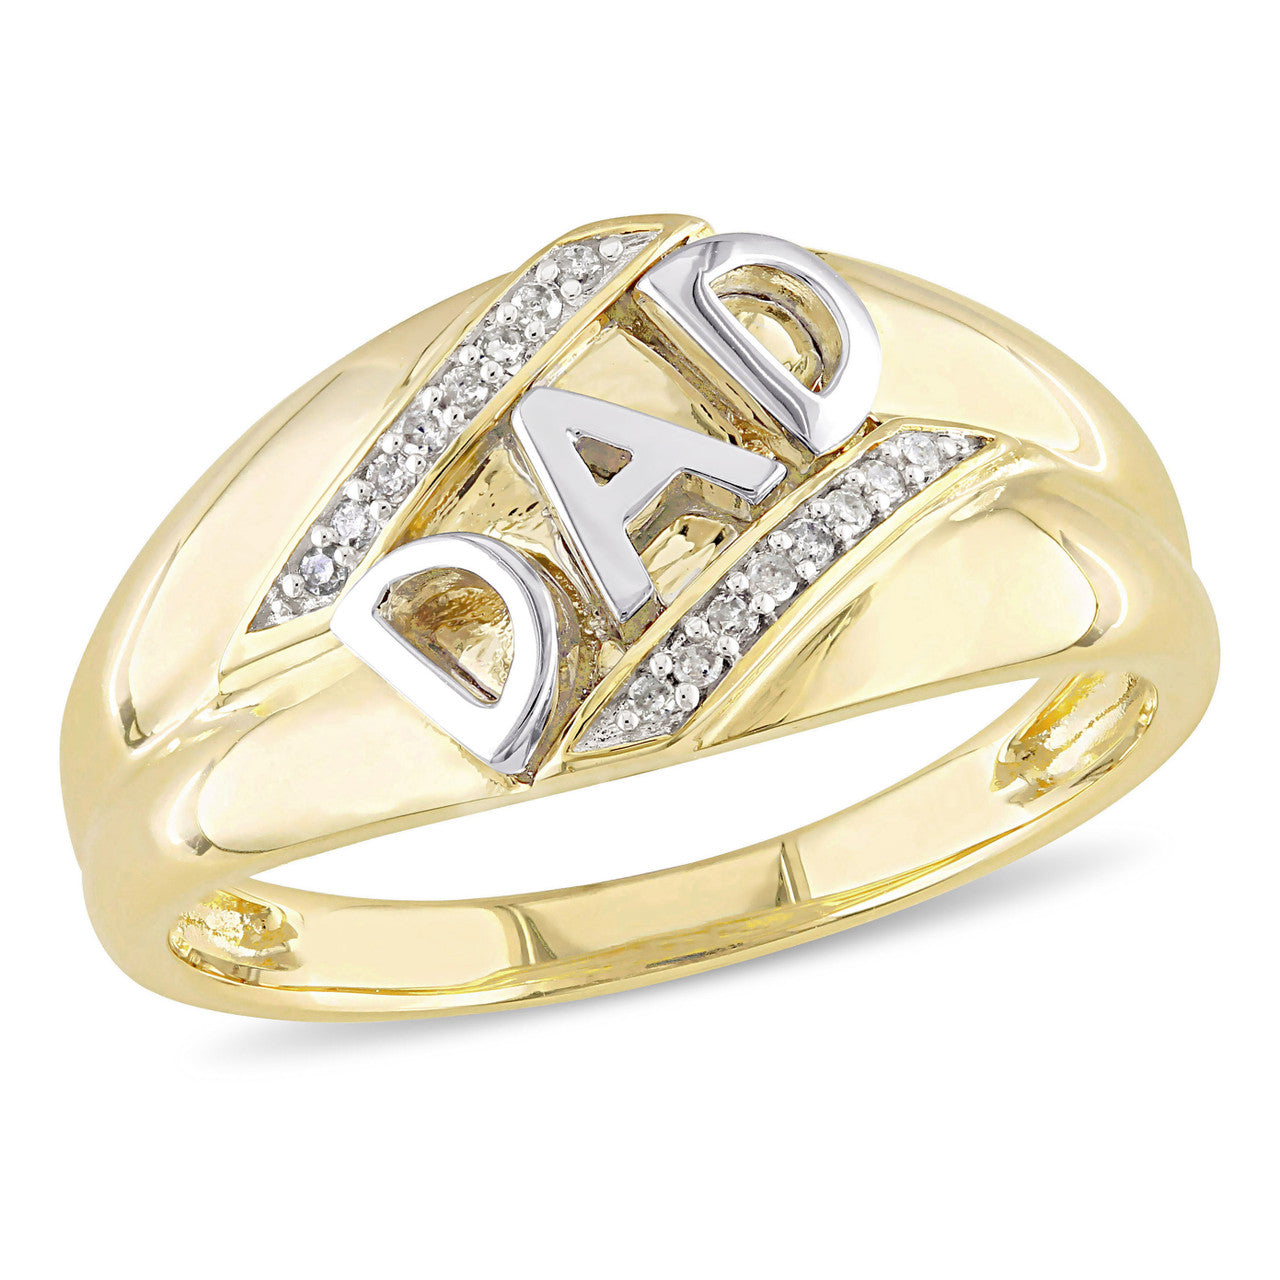 Ice Jewellery 0.06 ct Diamond TW Mens Ring 10K Yellow Gold GH I2;I3 - 75000004382 | Ice Jewellery Australia